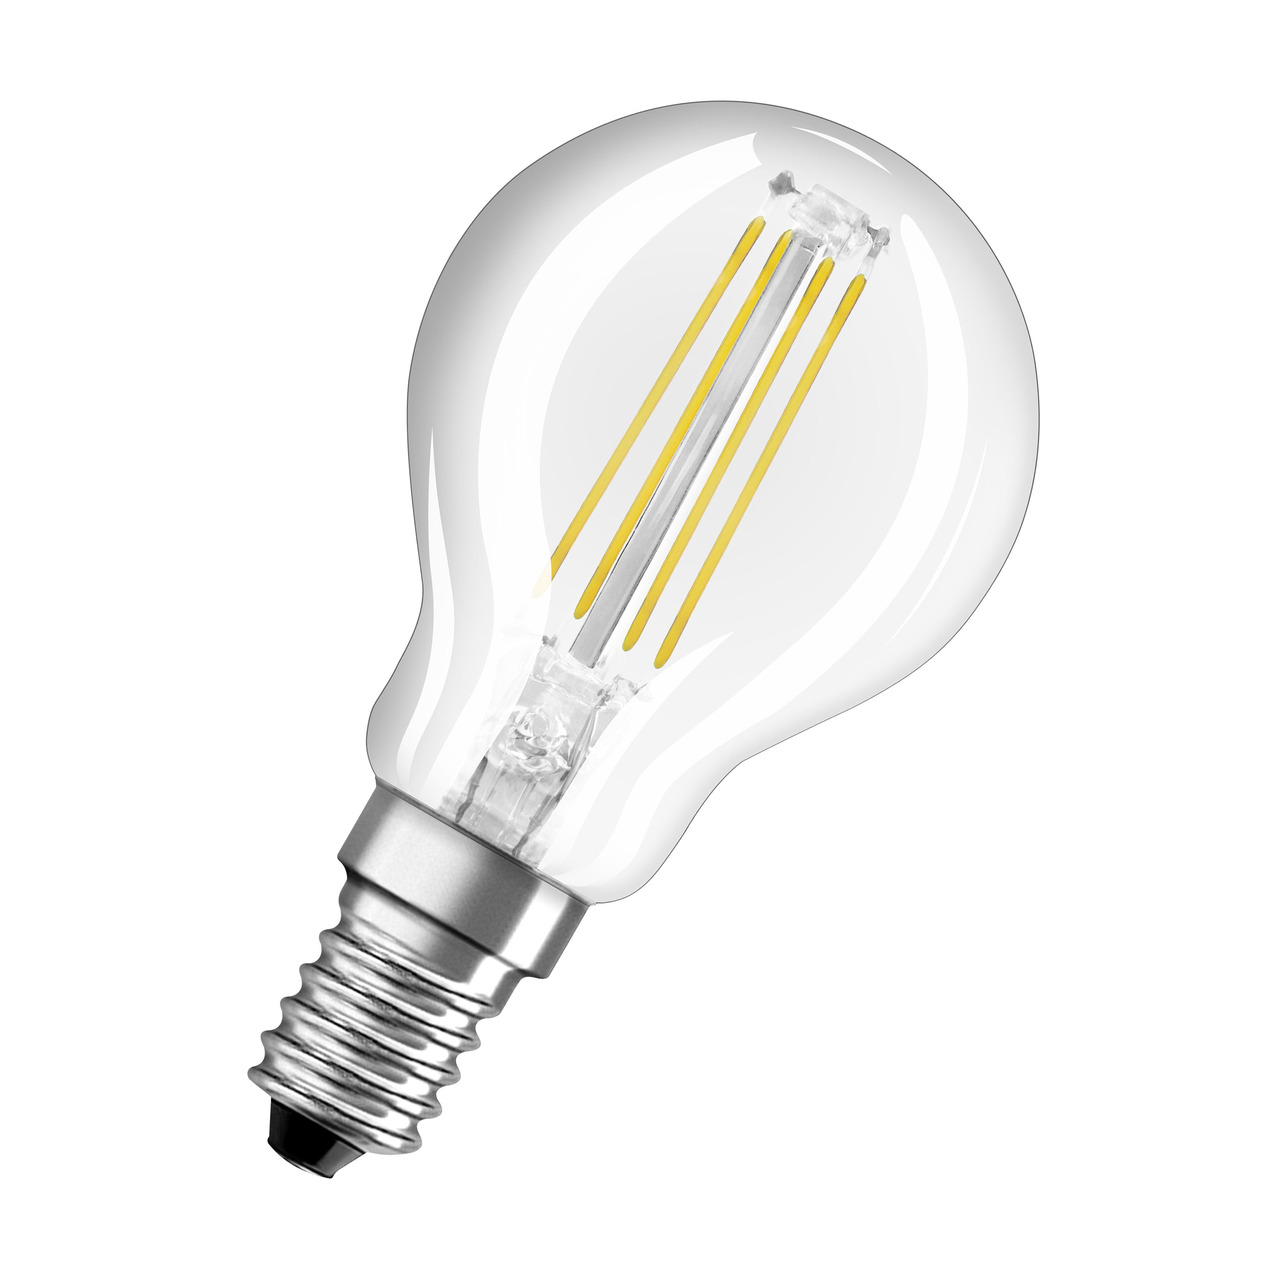 OSRAM 2-8-W-LED-Lampe P45- E14- 250 lm- warmweiss- klar- dimmbar unter Beleuchtung